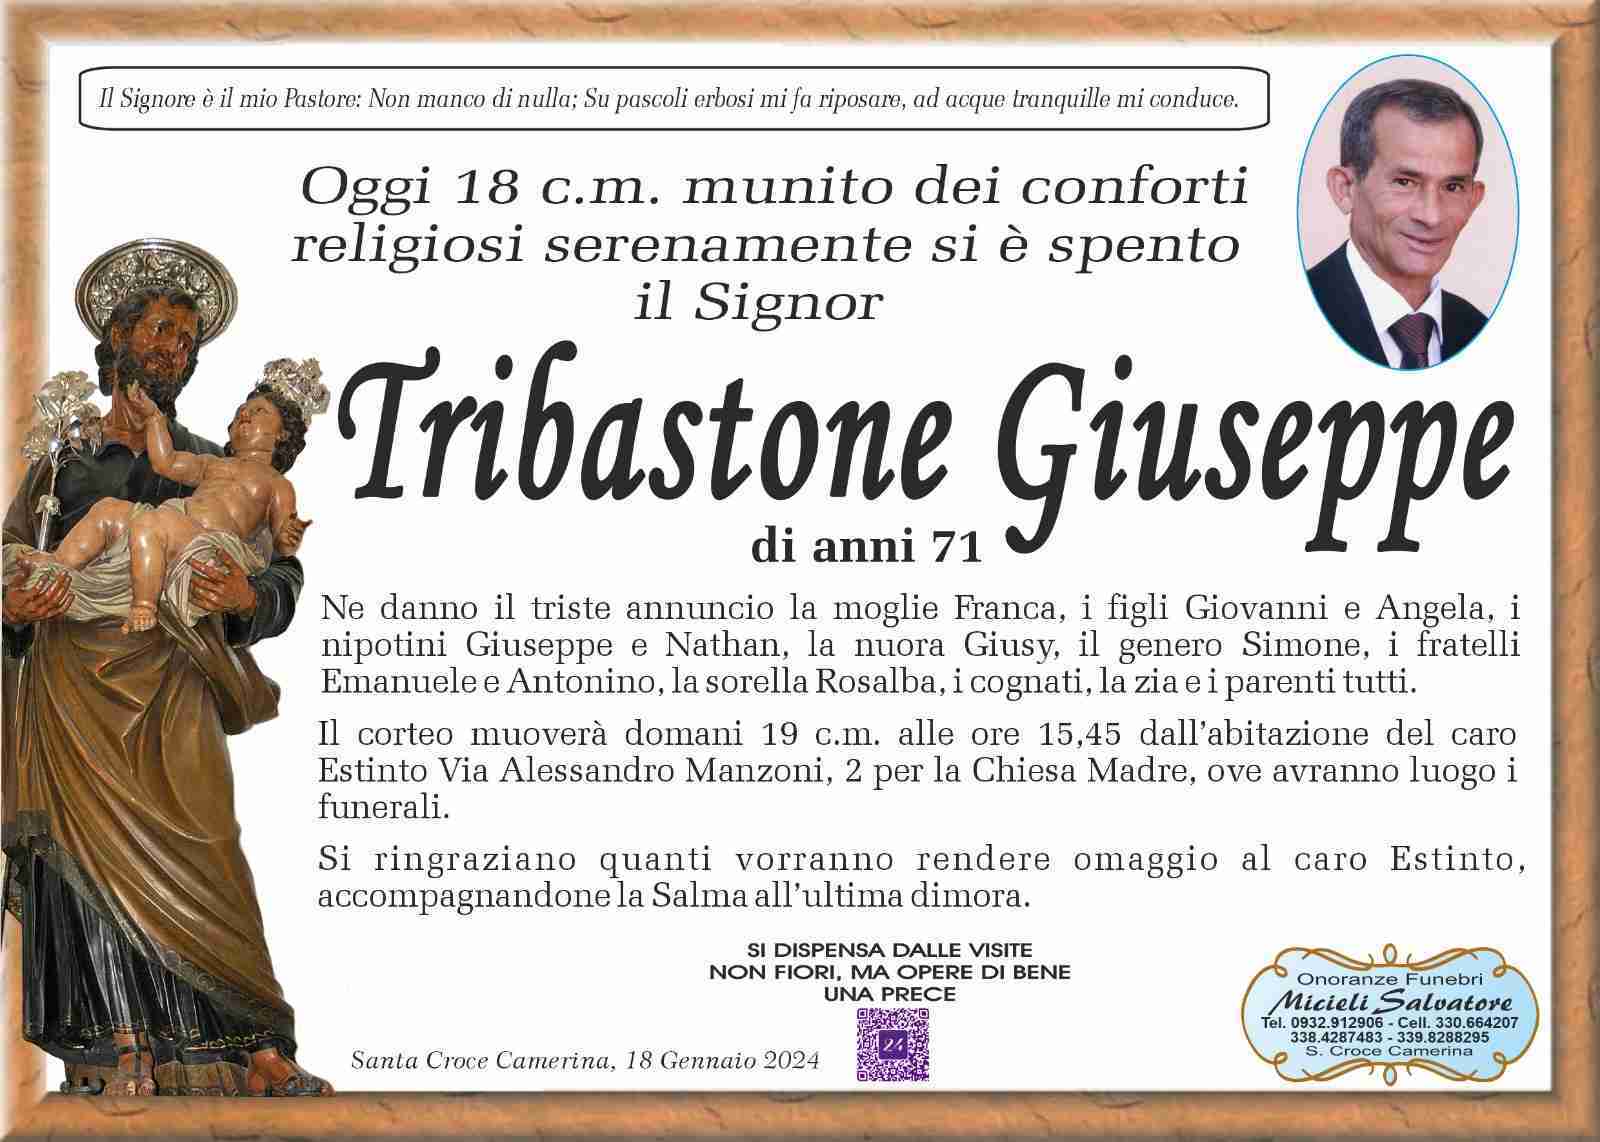 Giuseppe Tribastone